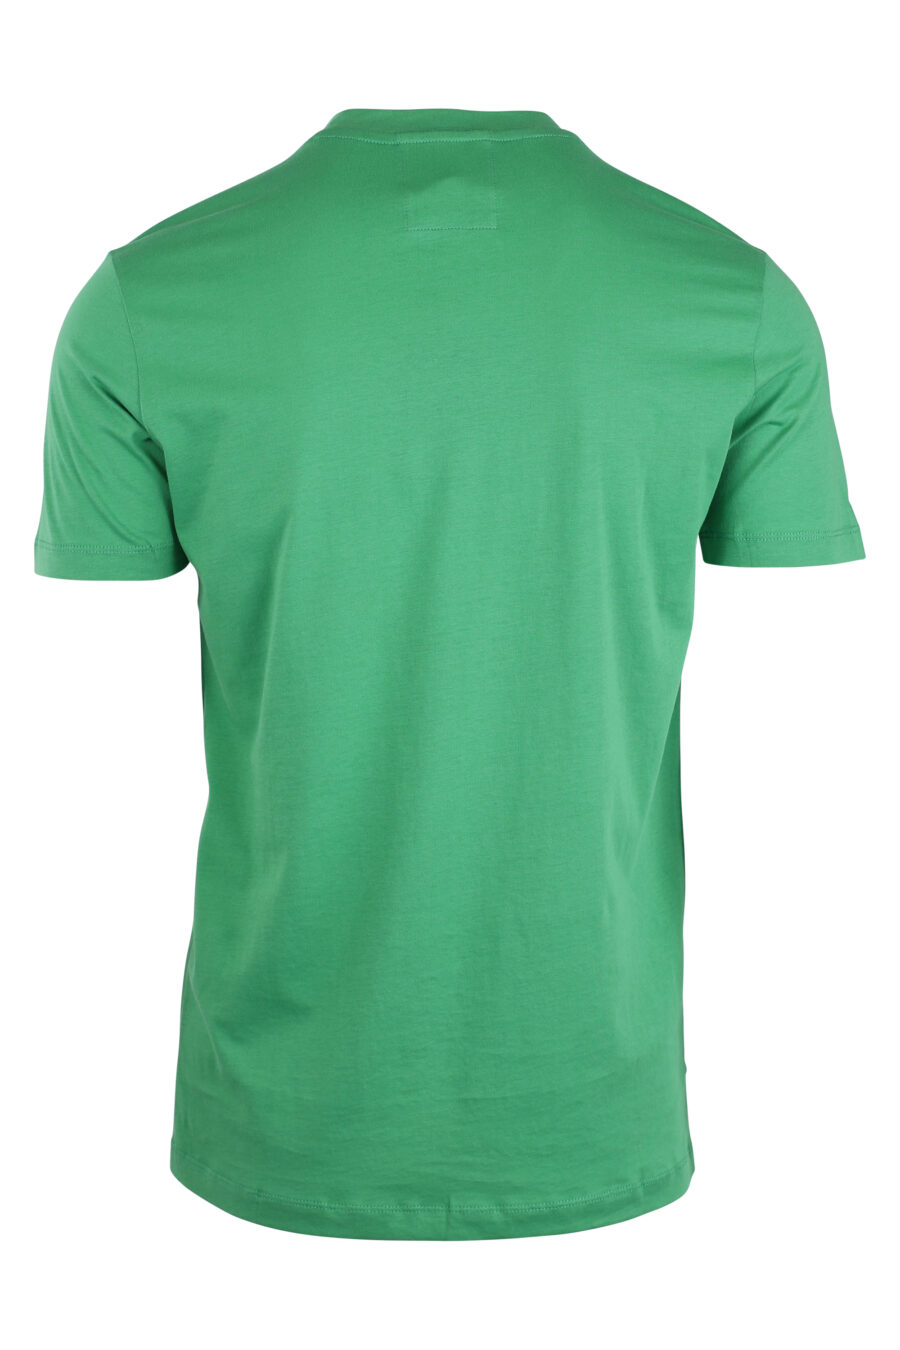 Camiseta verde con maxilogo aguila - IMG 4330